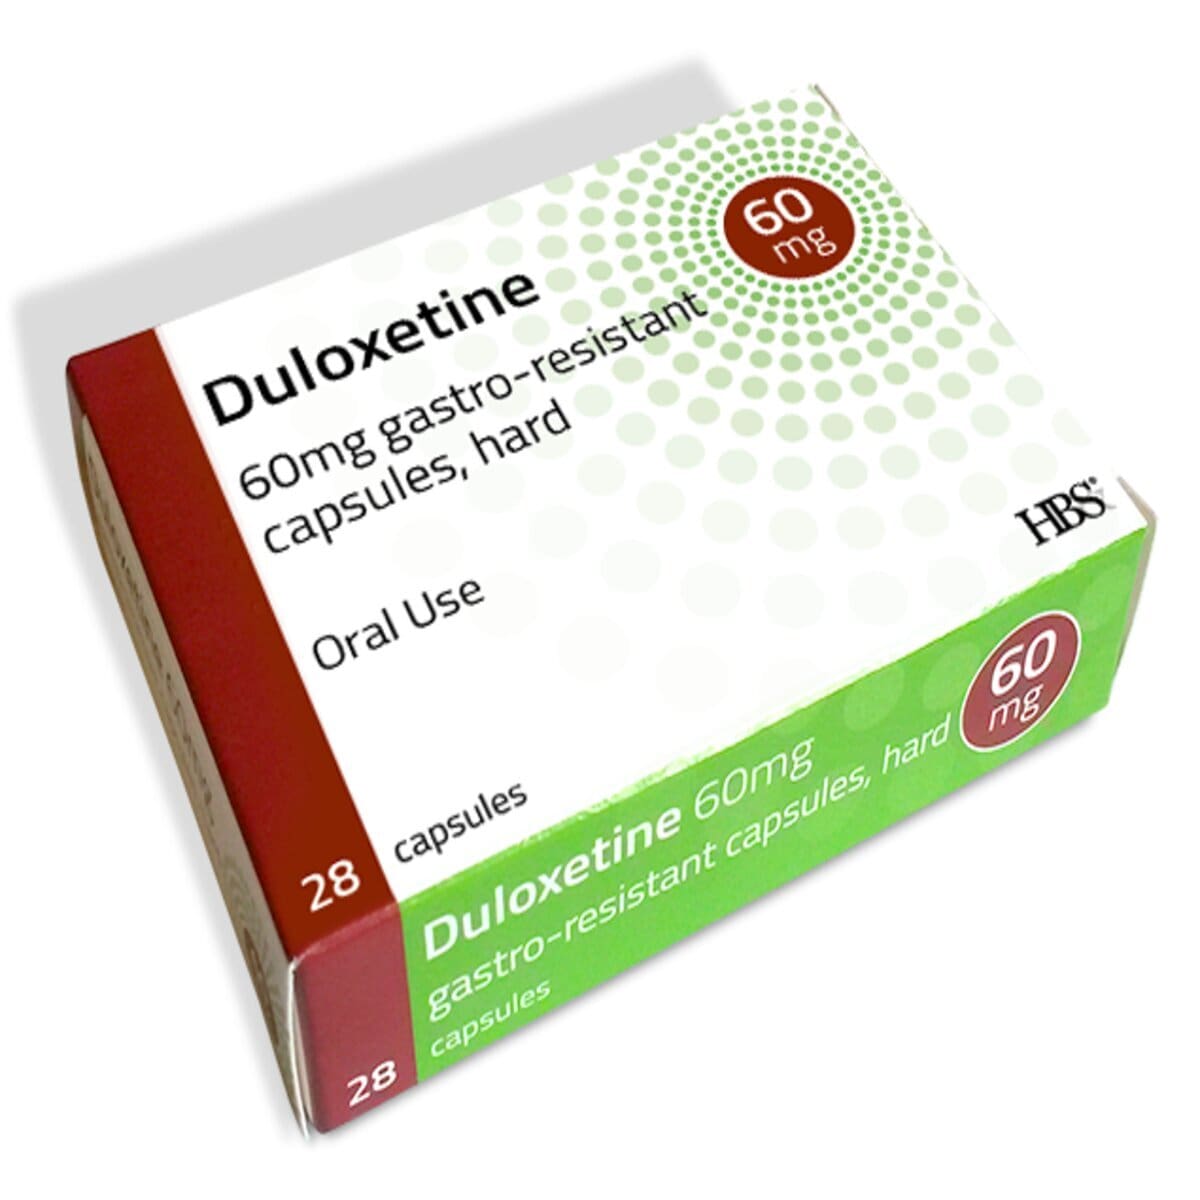 DULOSIGN 60 180 pills | Healthcare Pharmacy Online